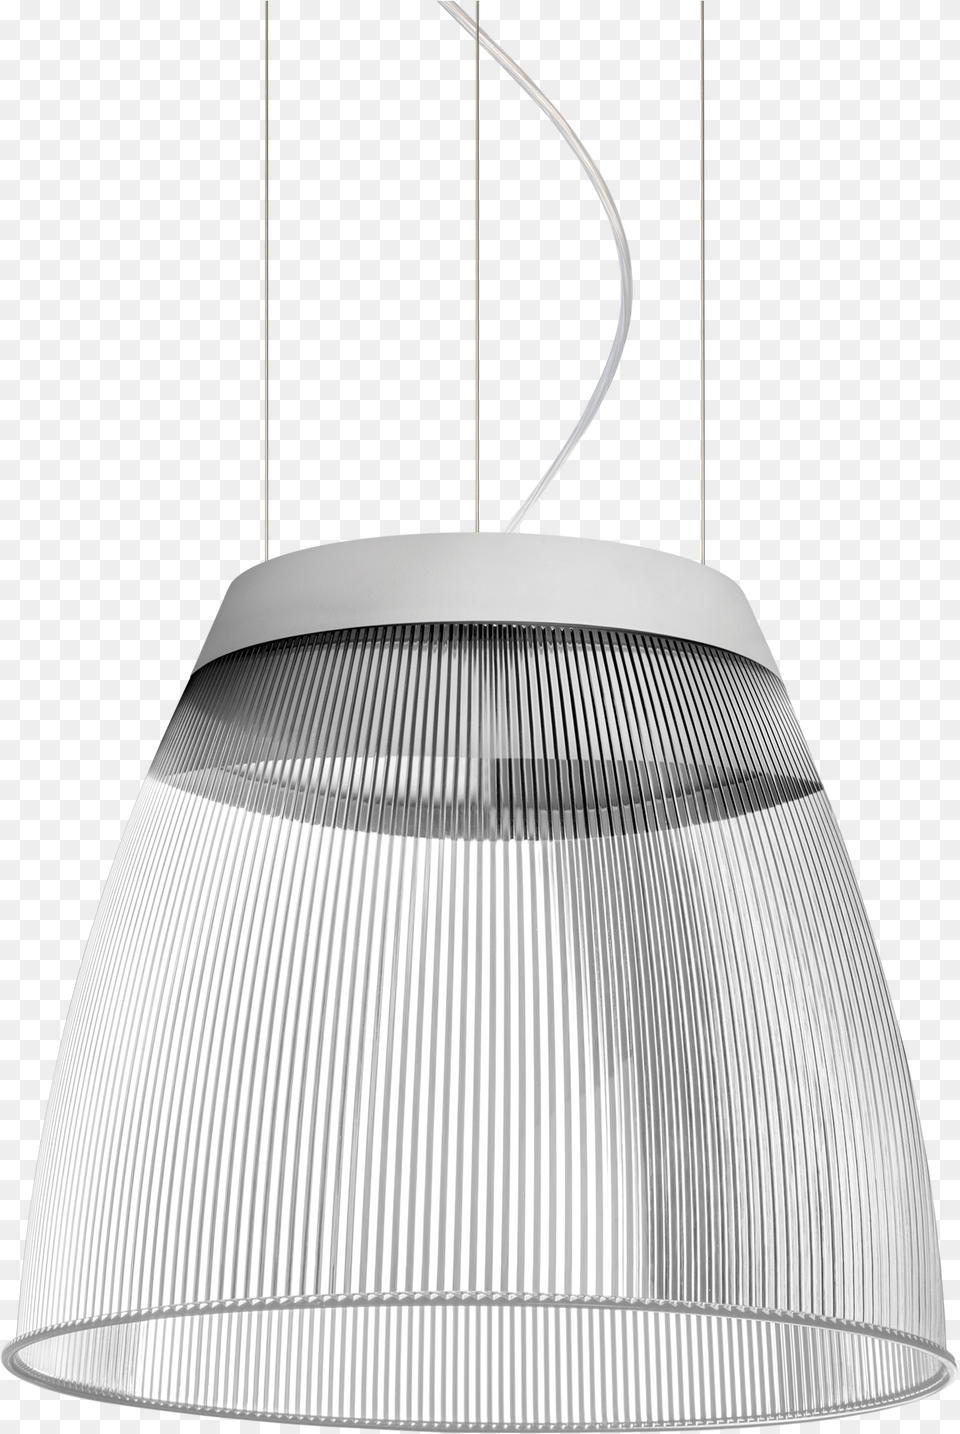 Salt Lighting, Chandelier, Lamp, Lampshade, Accessories Png Image